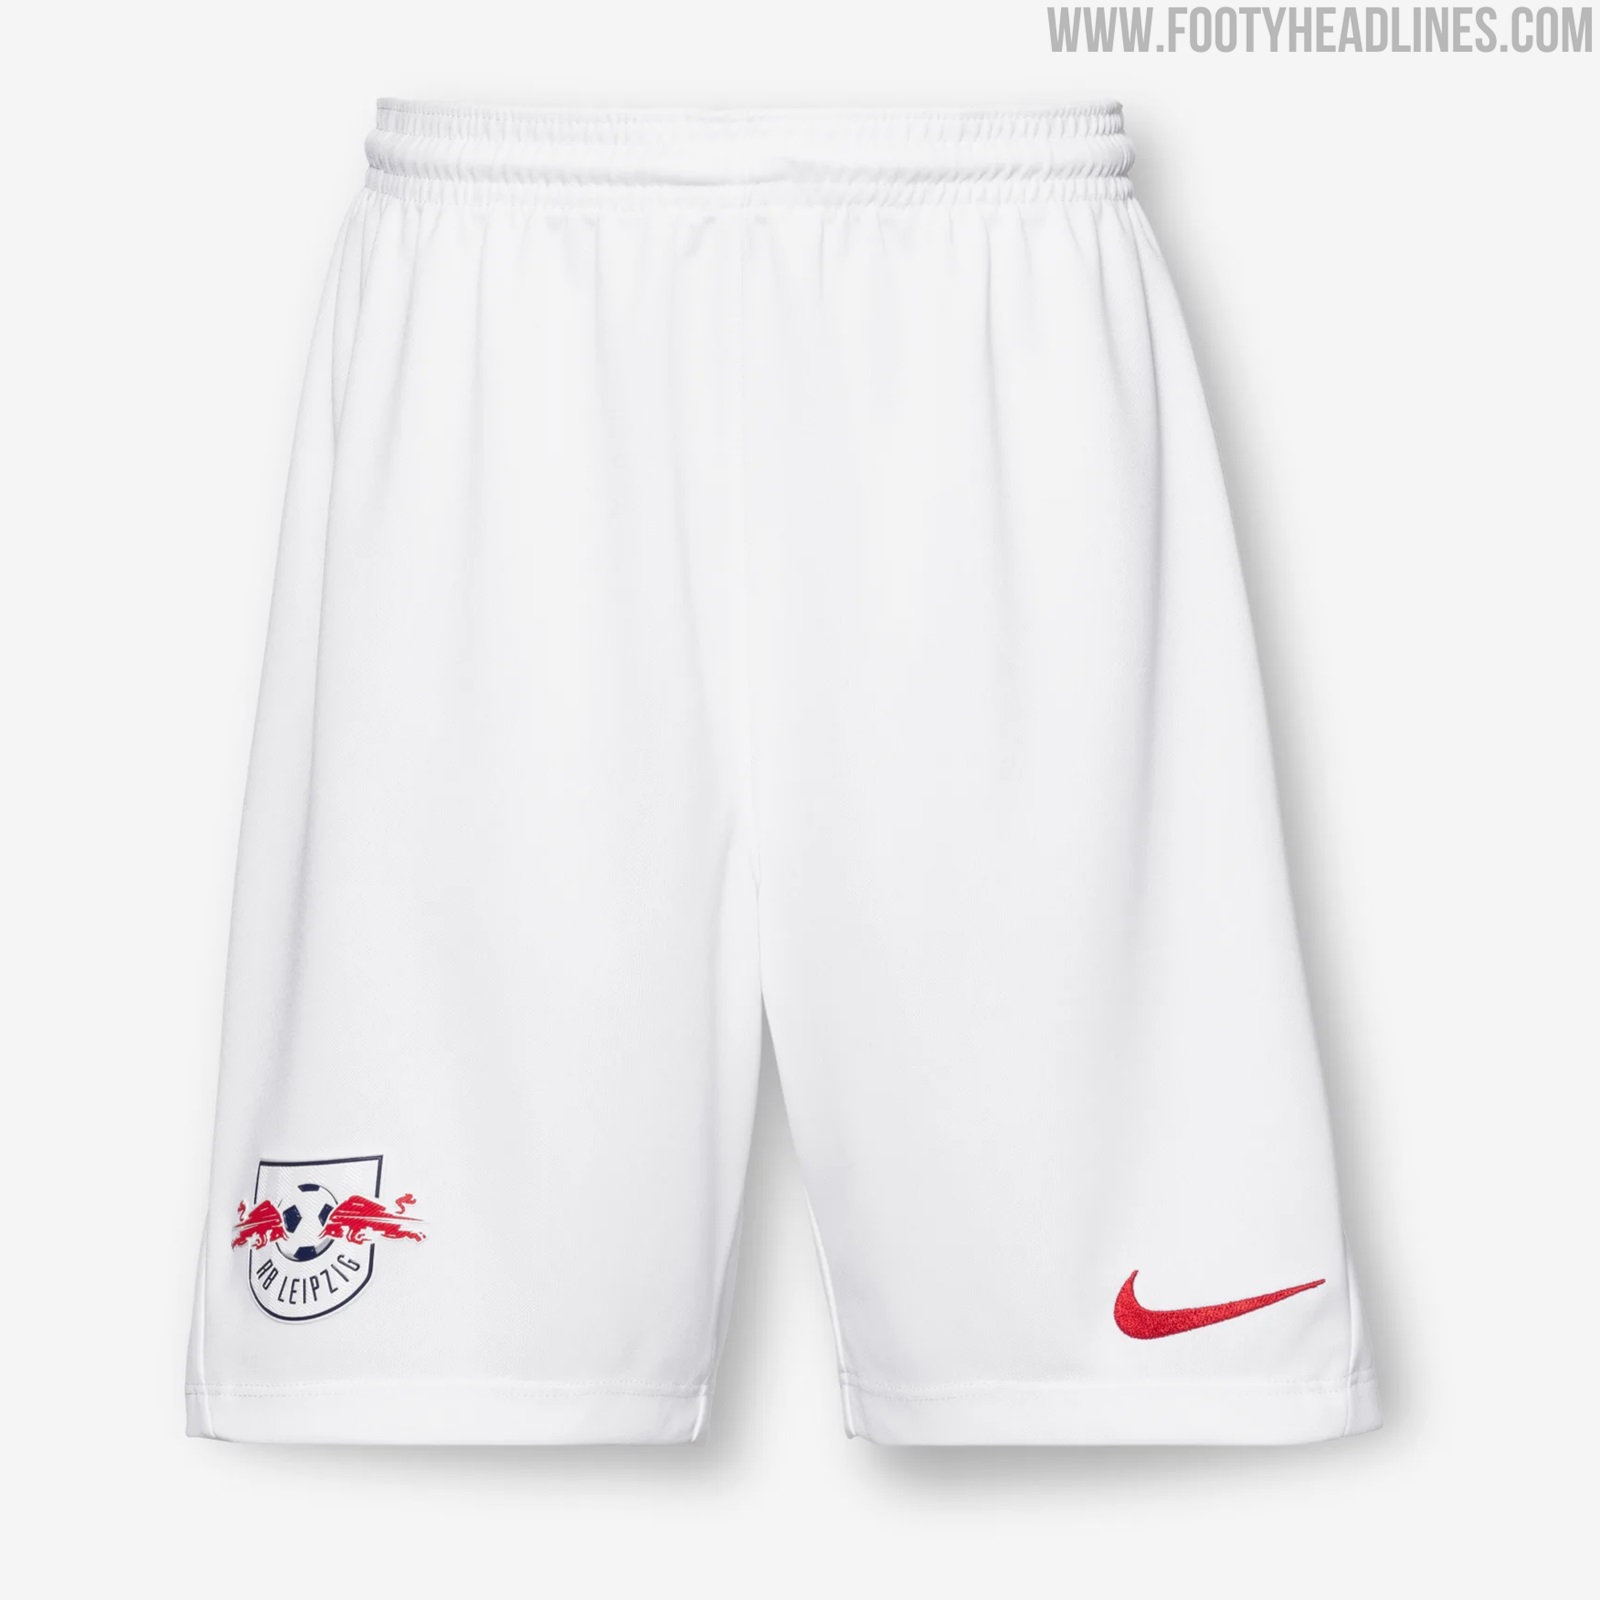 Nike Launch RB Leipzig 20/21 Away Shirt - SoccerBible